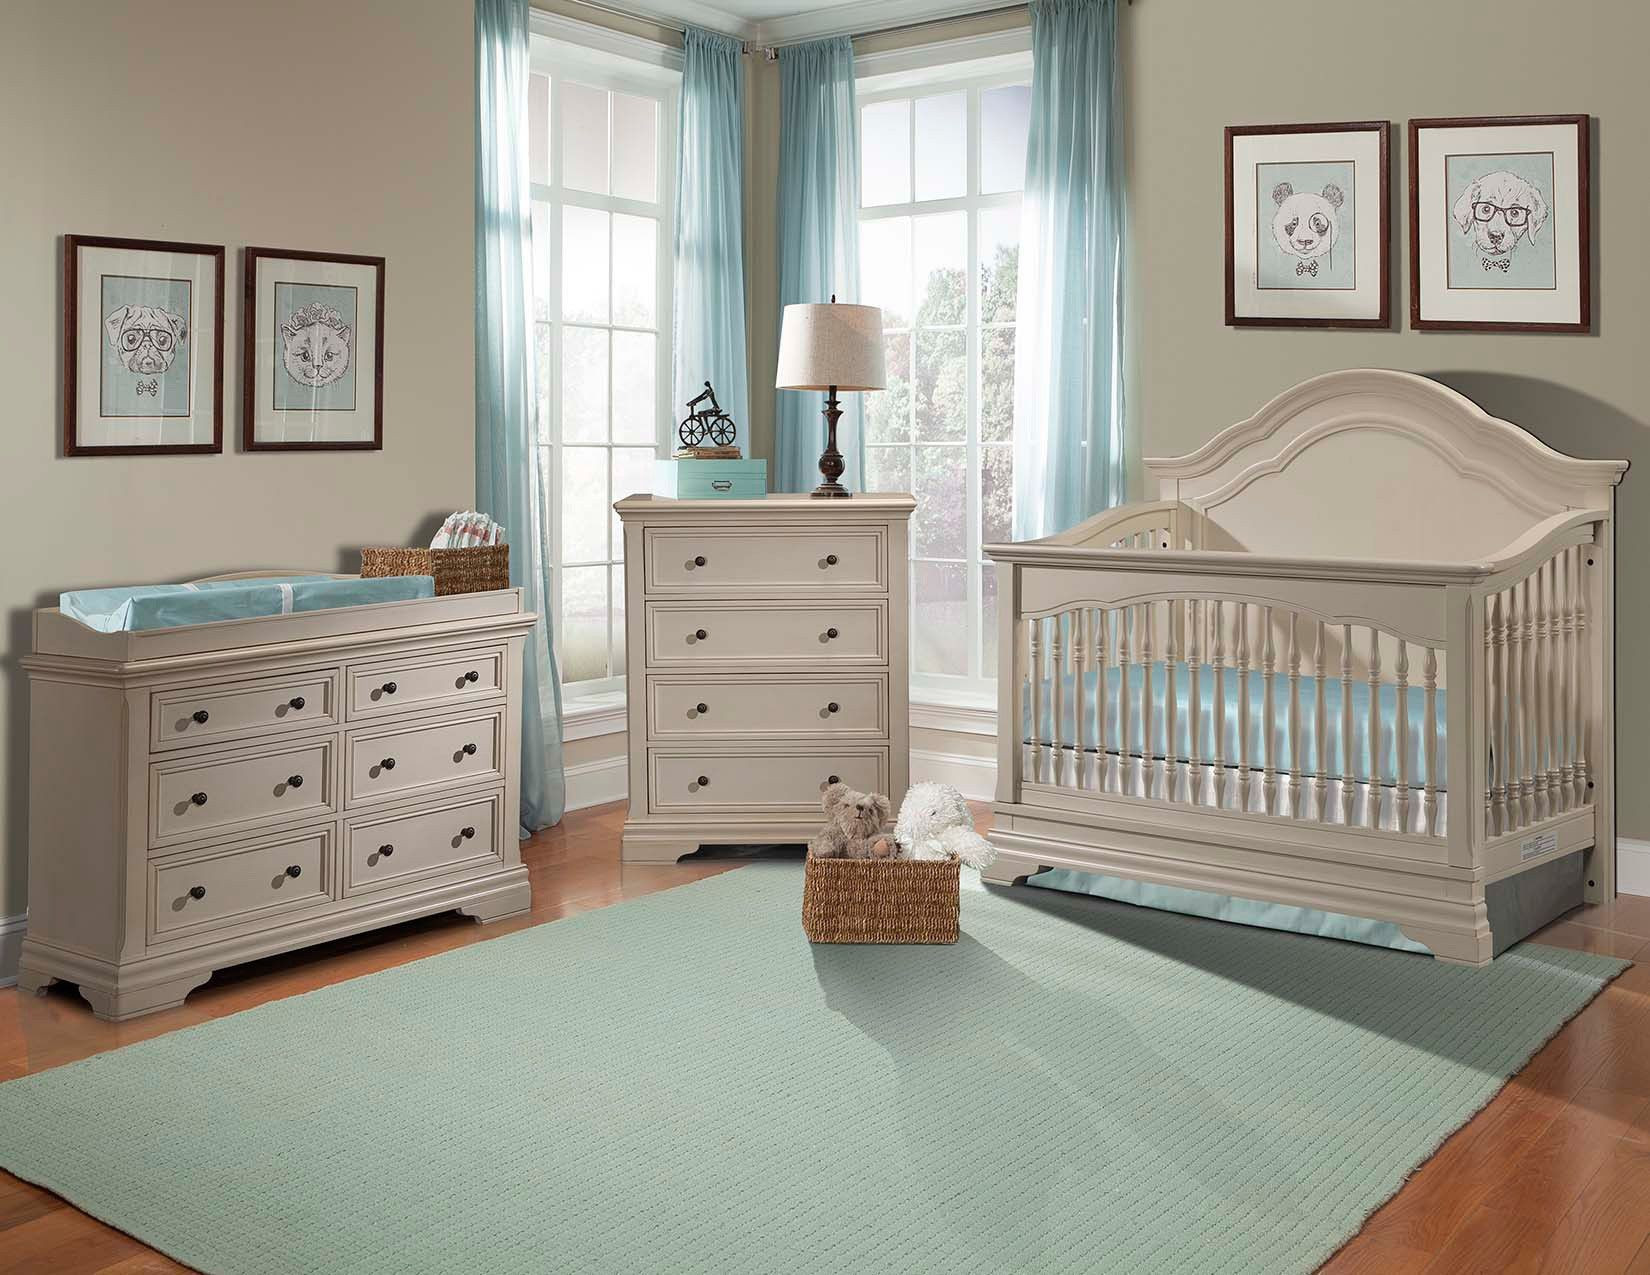 Baby Room Dresser
 Stella Baby and Child Athena 3 Piece Nursery Set in